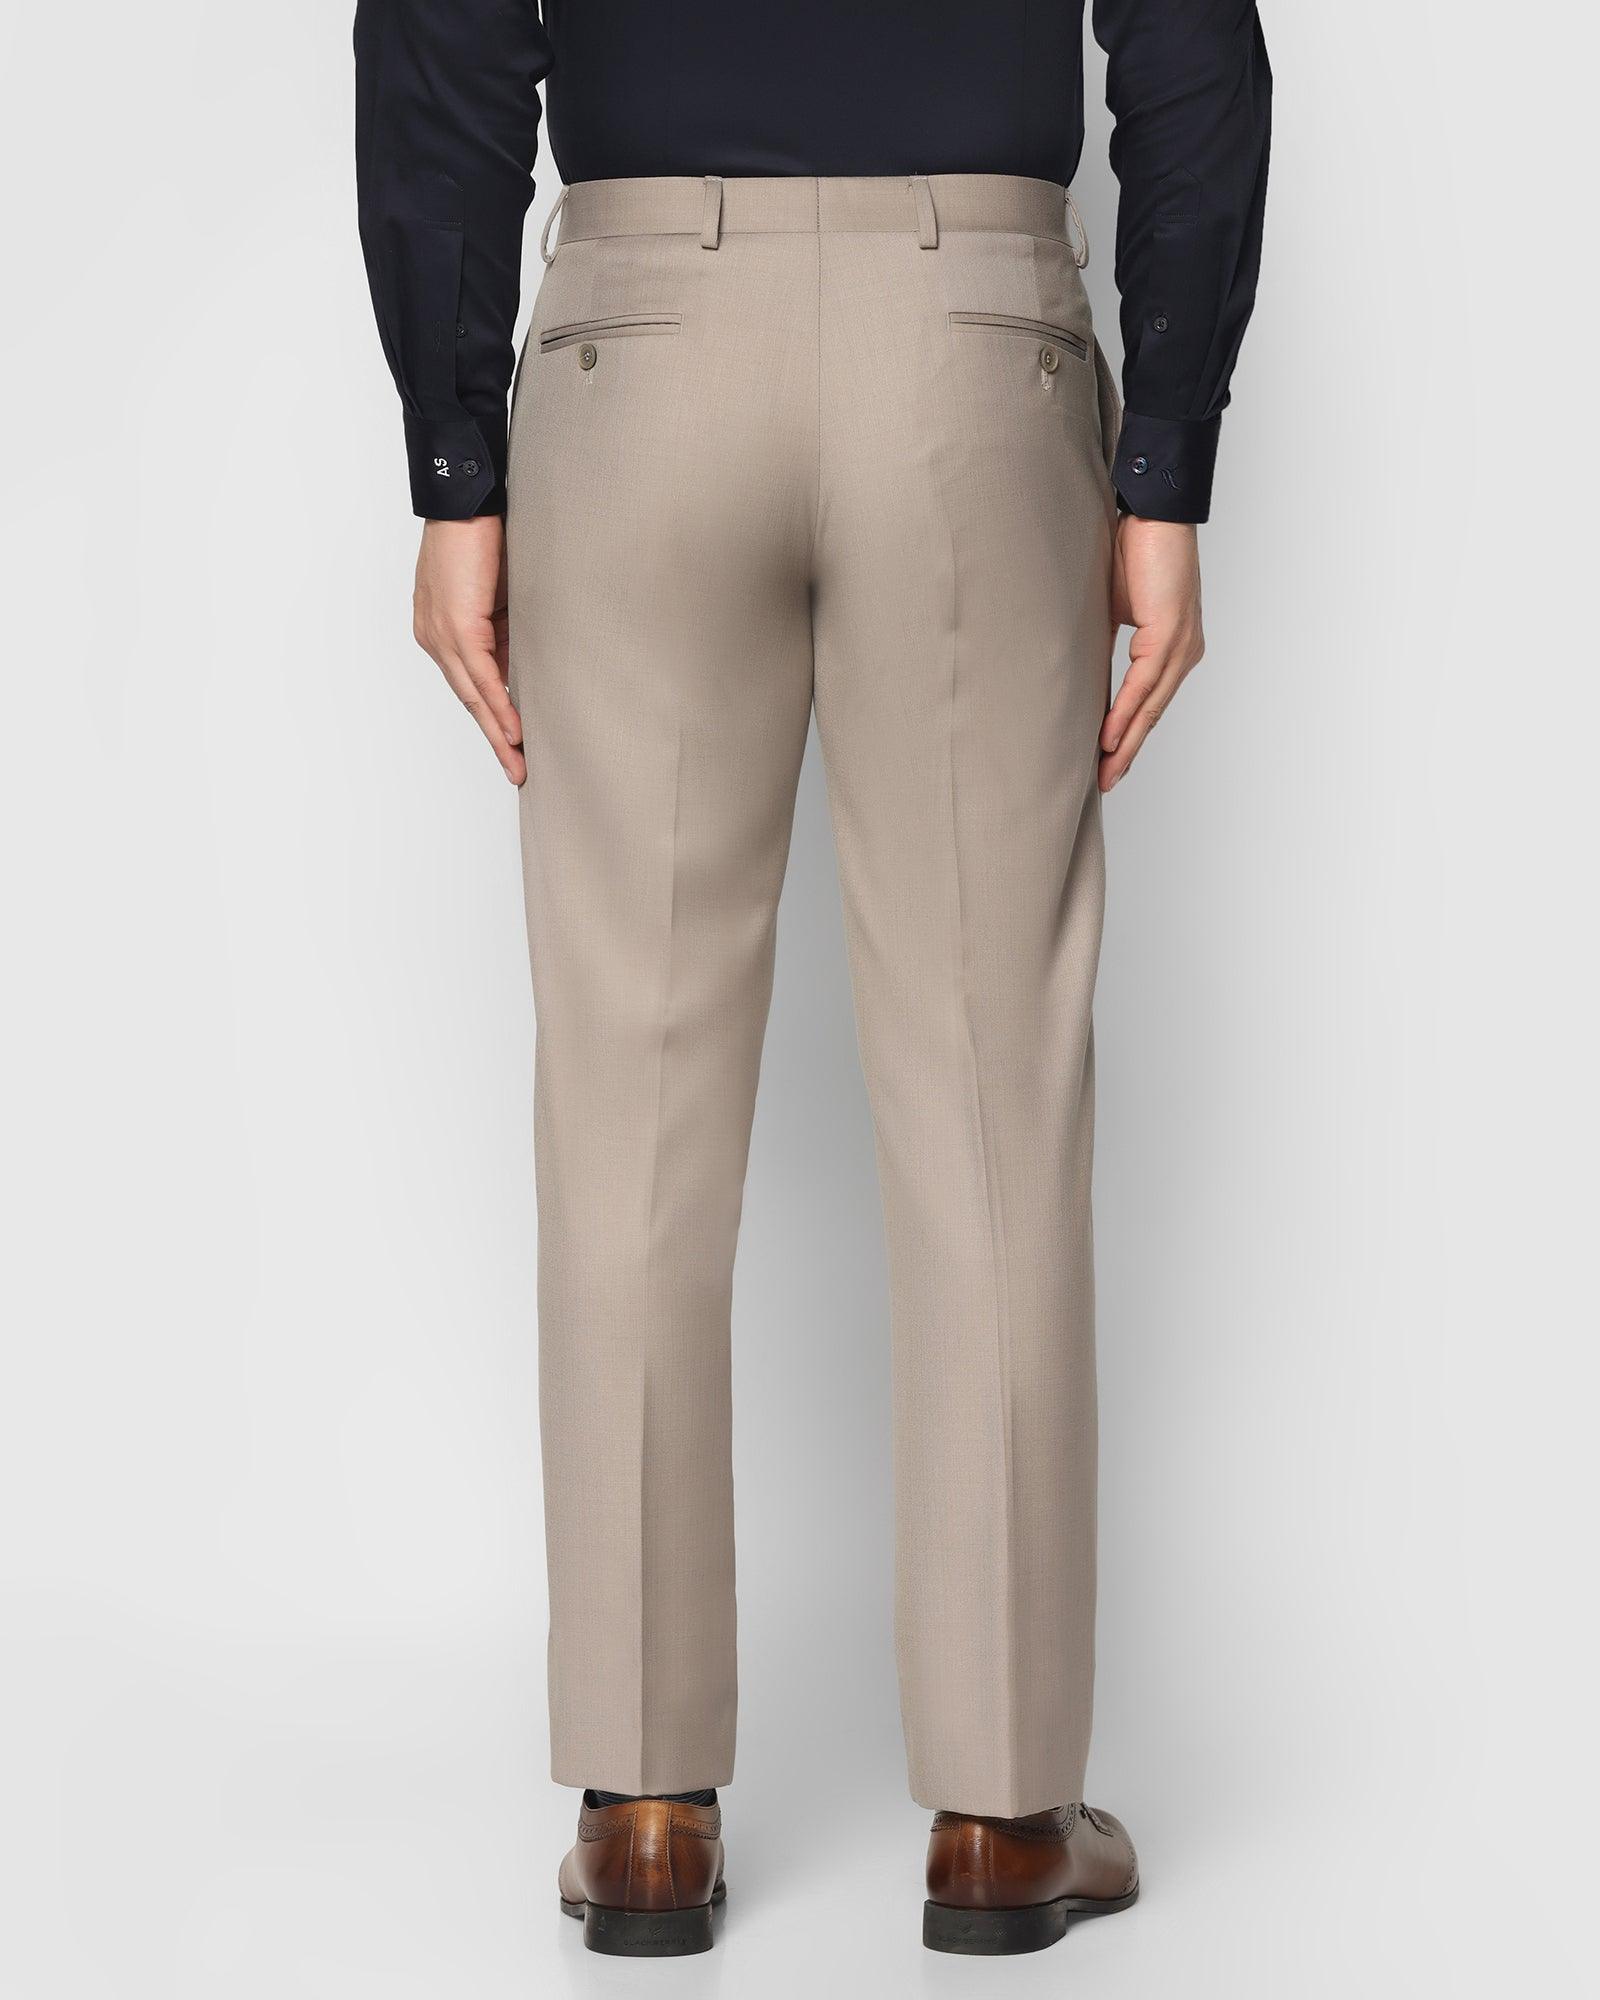 Slim Fit B-91 Formal Beige Textured Trouser - Cairon